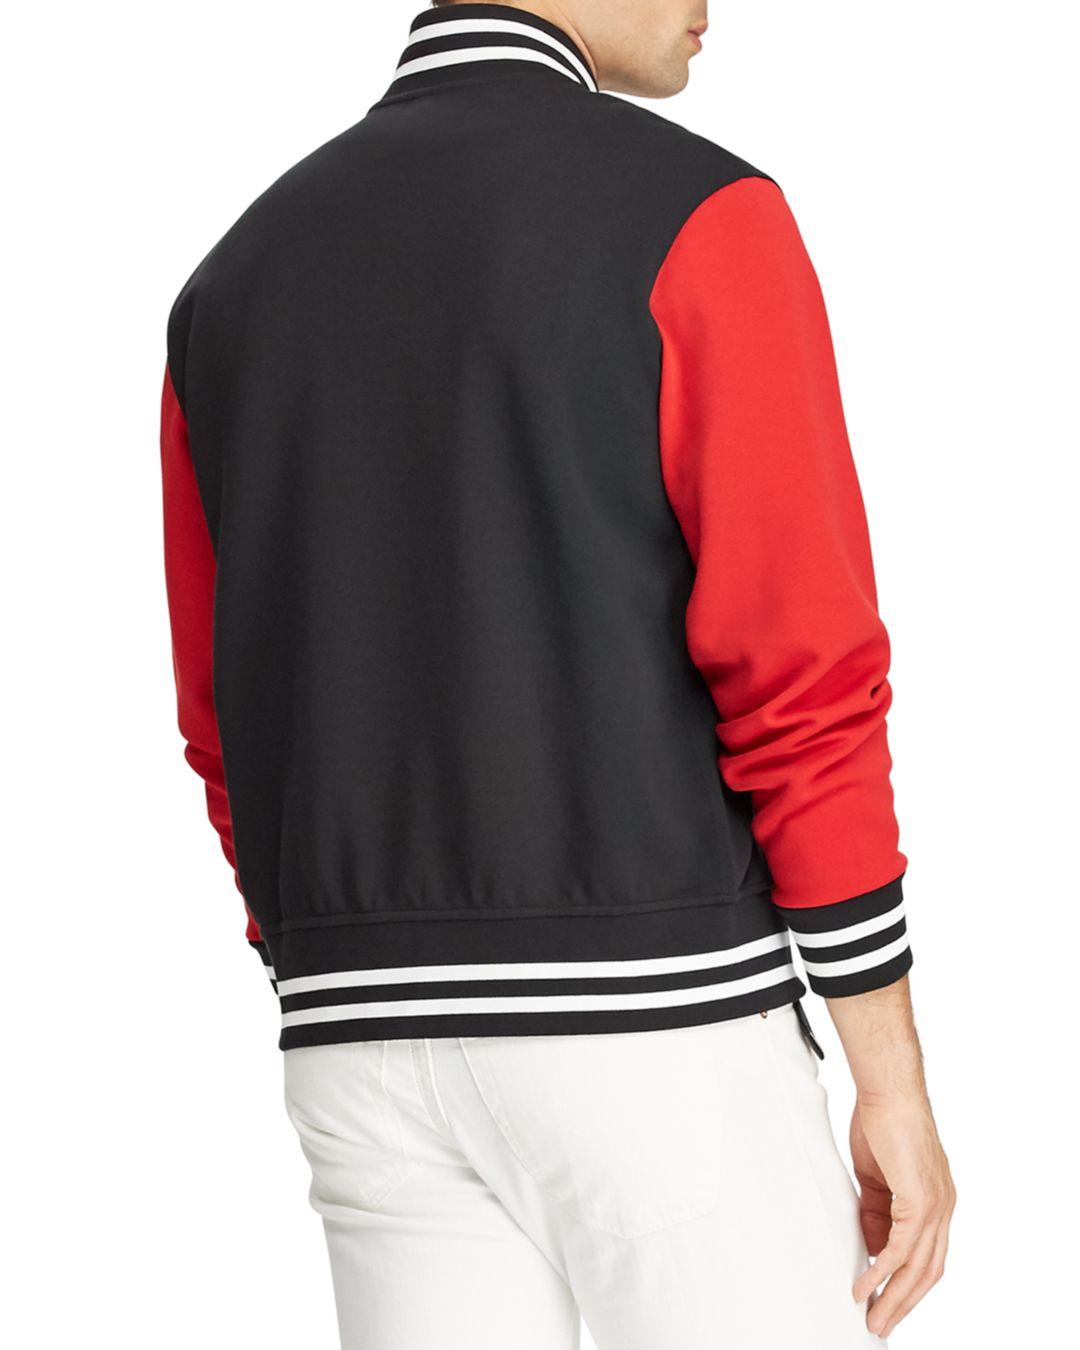 Polo Ralph Lauren P - Wing Baseball Jacket in Black for Men - Lyst